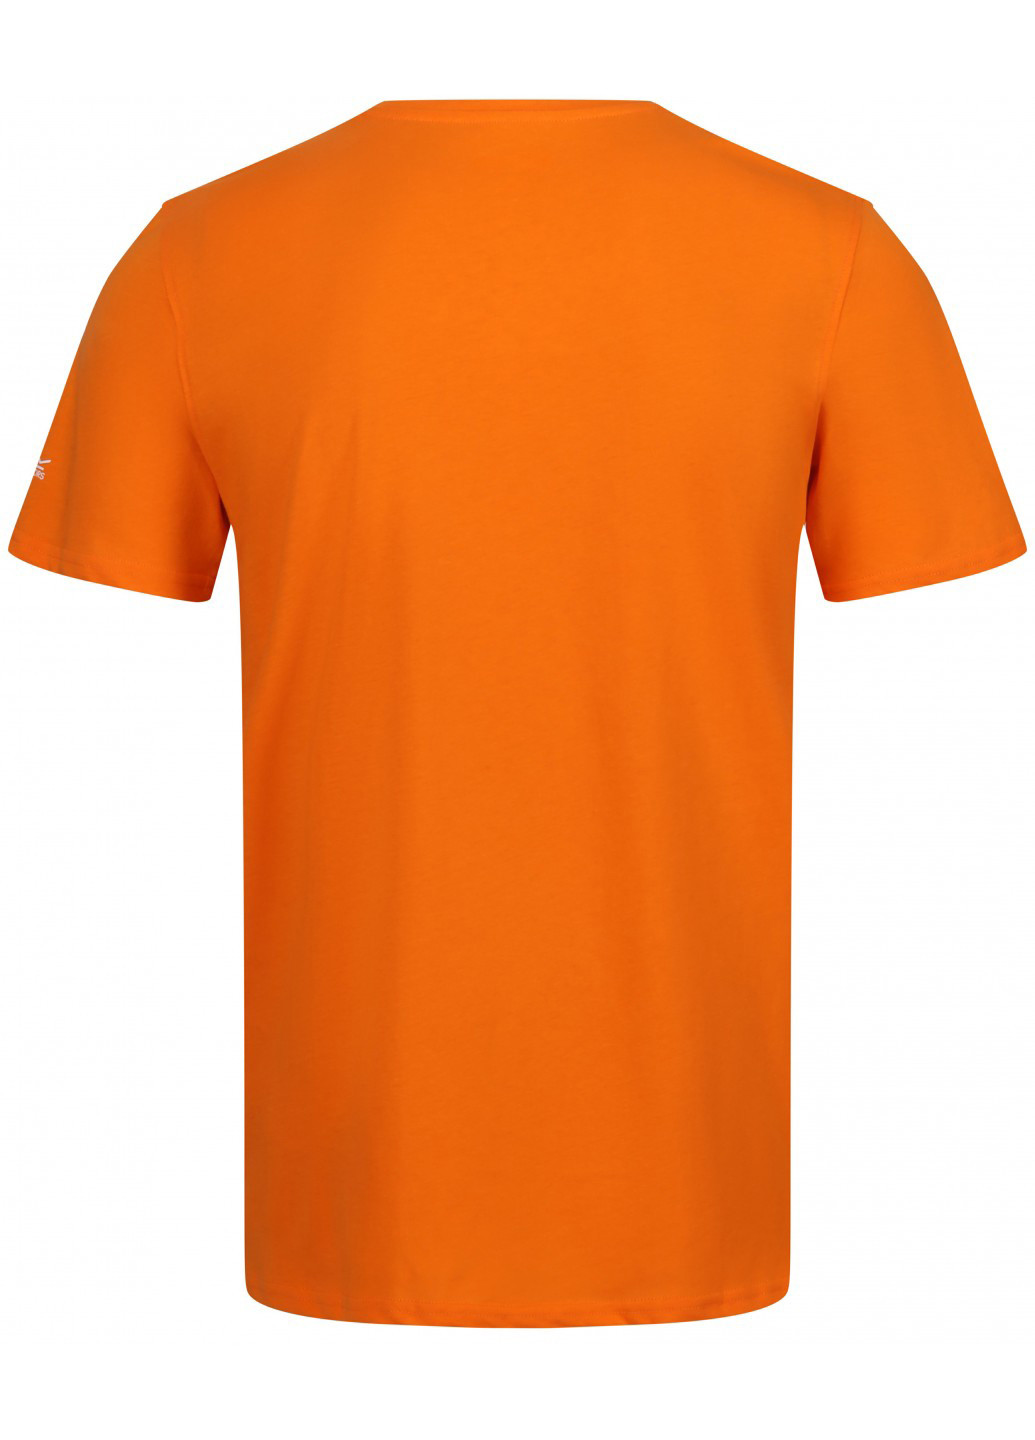 Оранжевая футболка Regatta Breezed IV